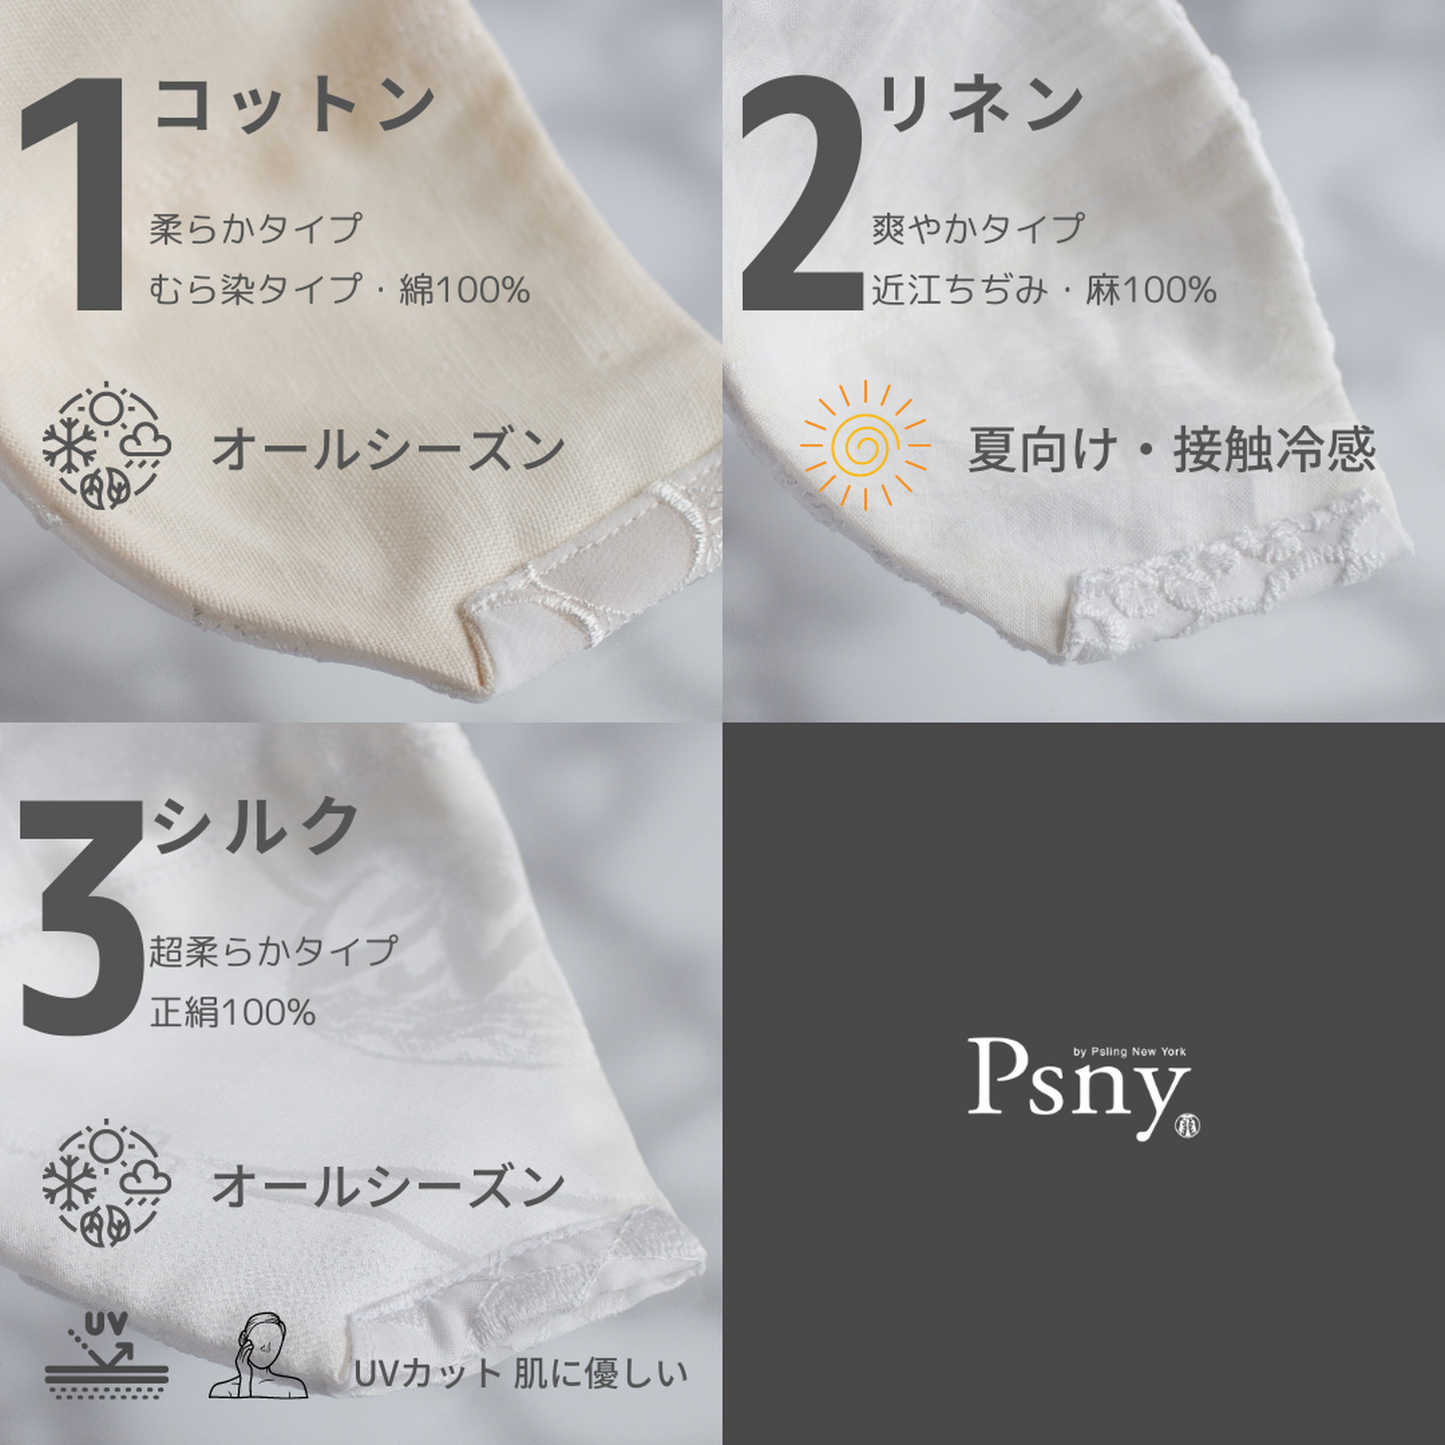 PSNY Yuzen/Button 2/Peony/Linen/Mask Omi Chijimi 麻 無紡布過濾器 手揉麻 Yoryu 皮膚表面/絲綢可選 面膜 自然美 美麗的日本服裝 日本服裝 奢華原始材料 -YR09